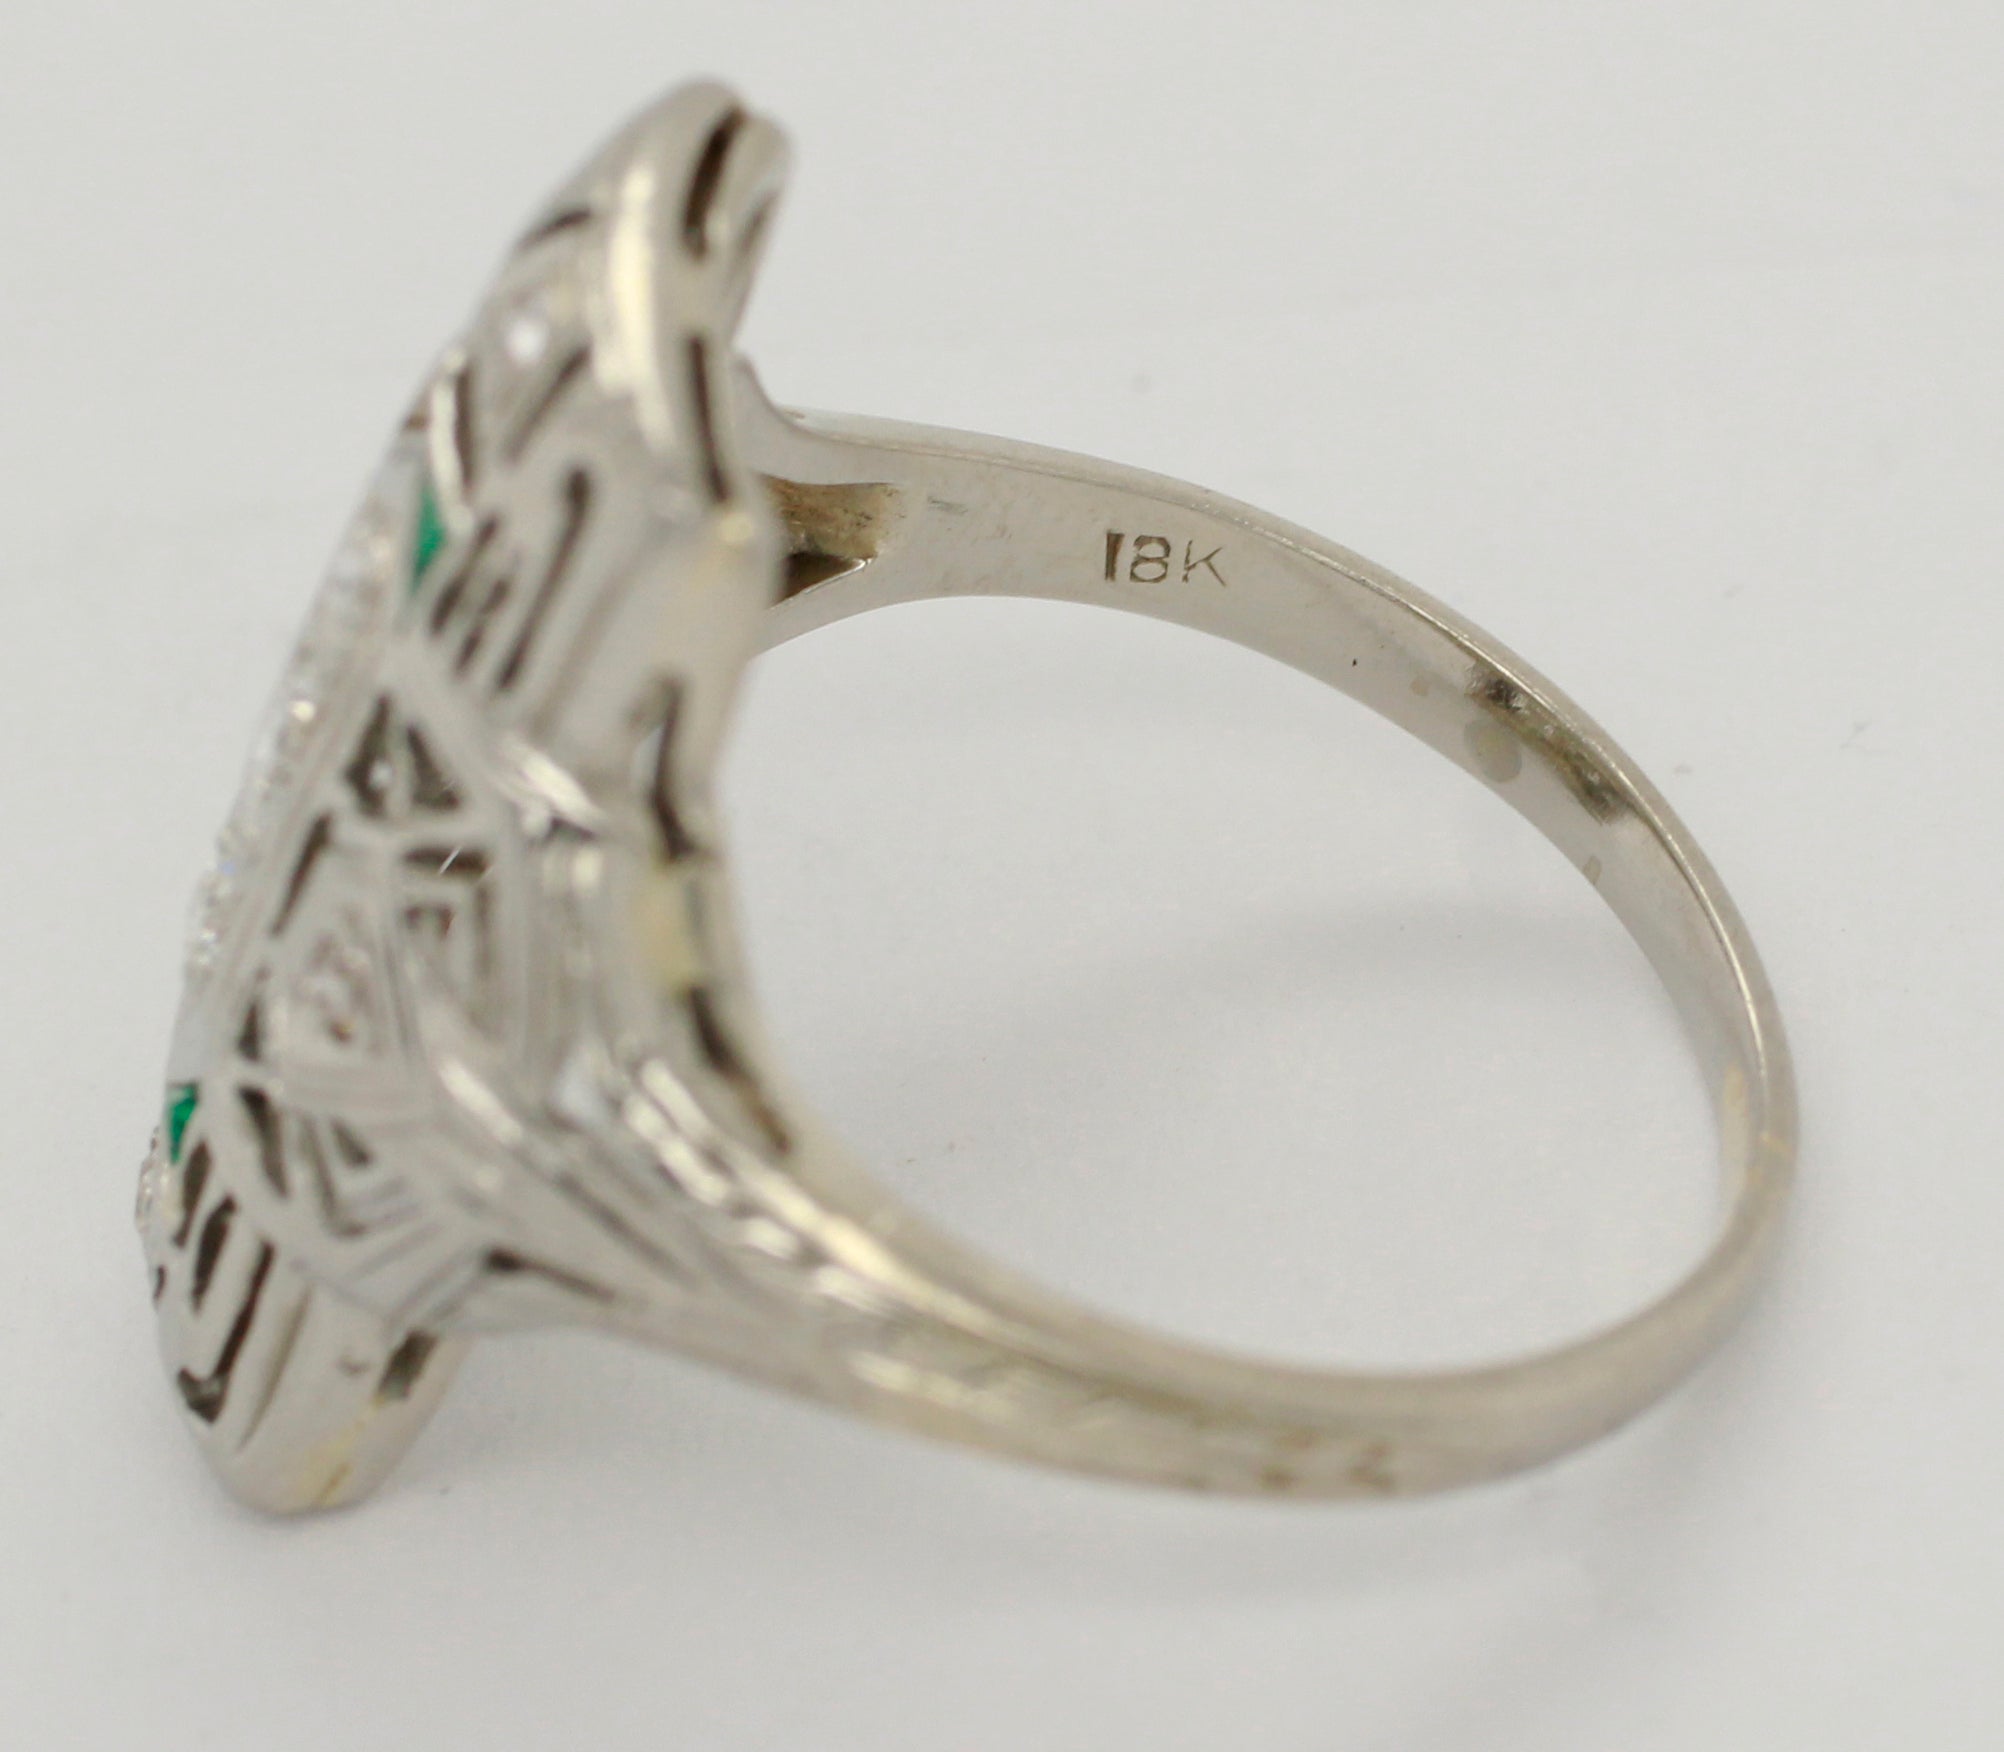 Antique Art Deco 0.20ctw Diamond Emerald Filigree Cocktail Ring - 18k White Gold